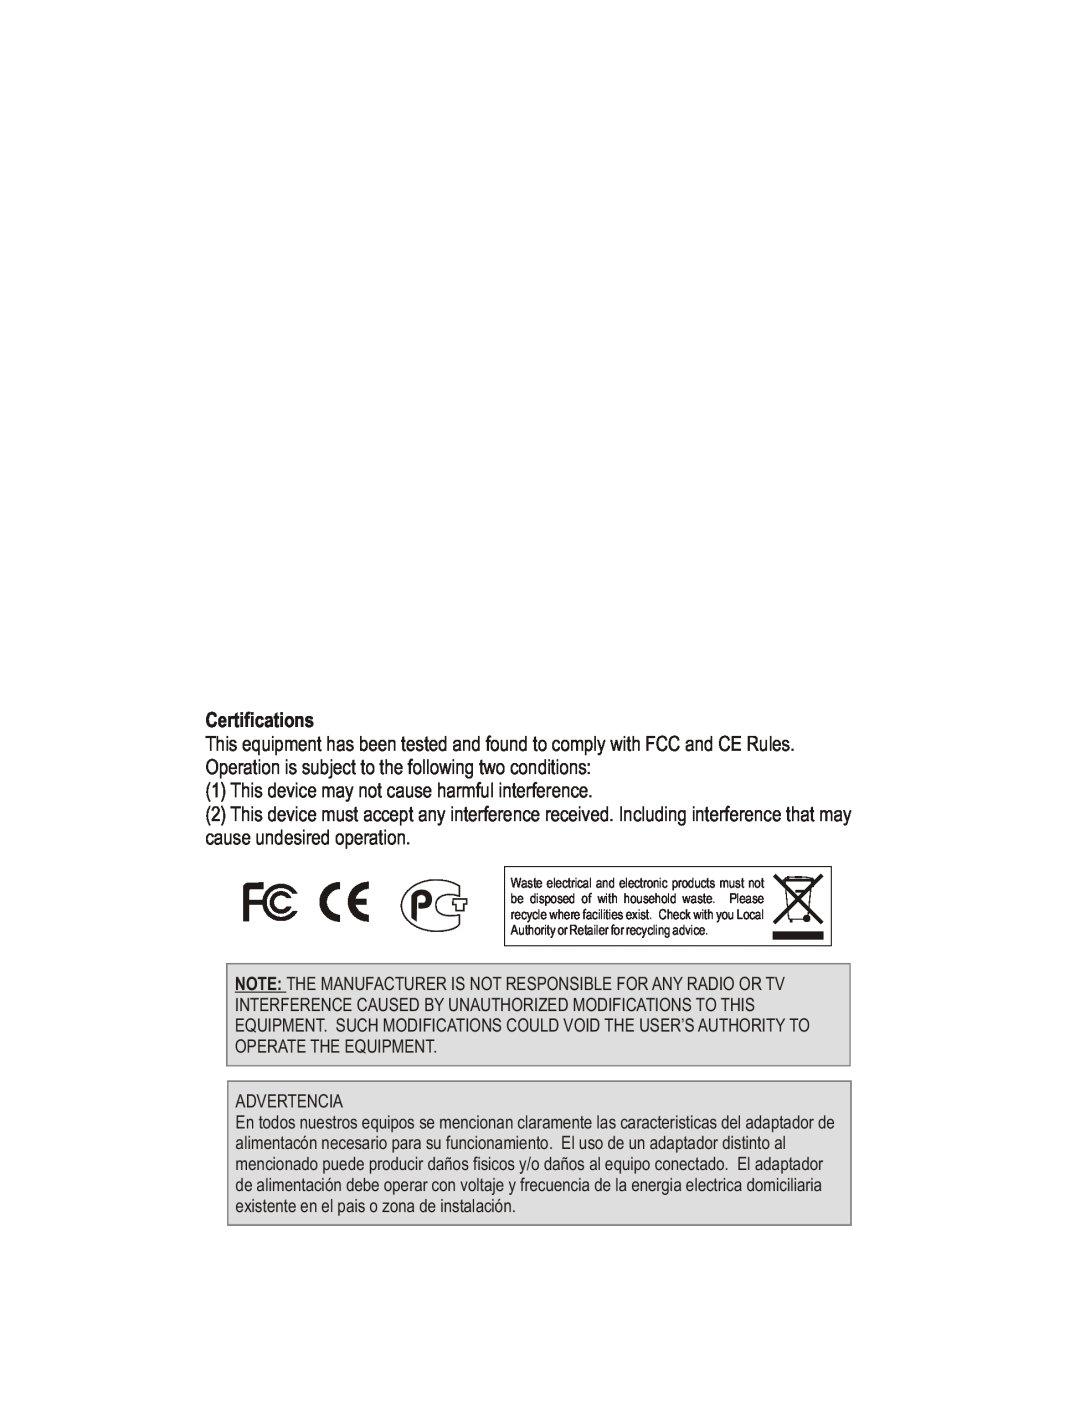 TRENDnet TEG-160WS manual Certifications 